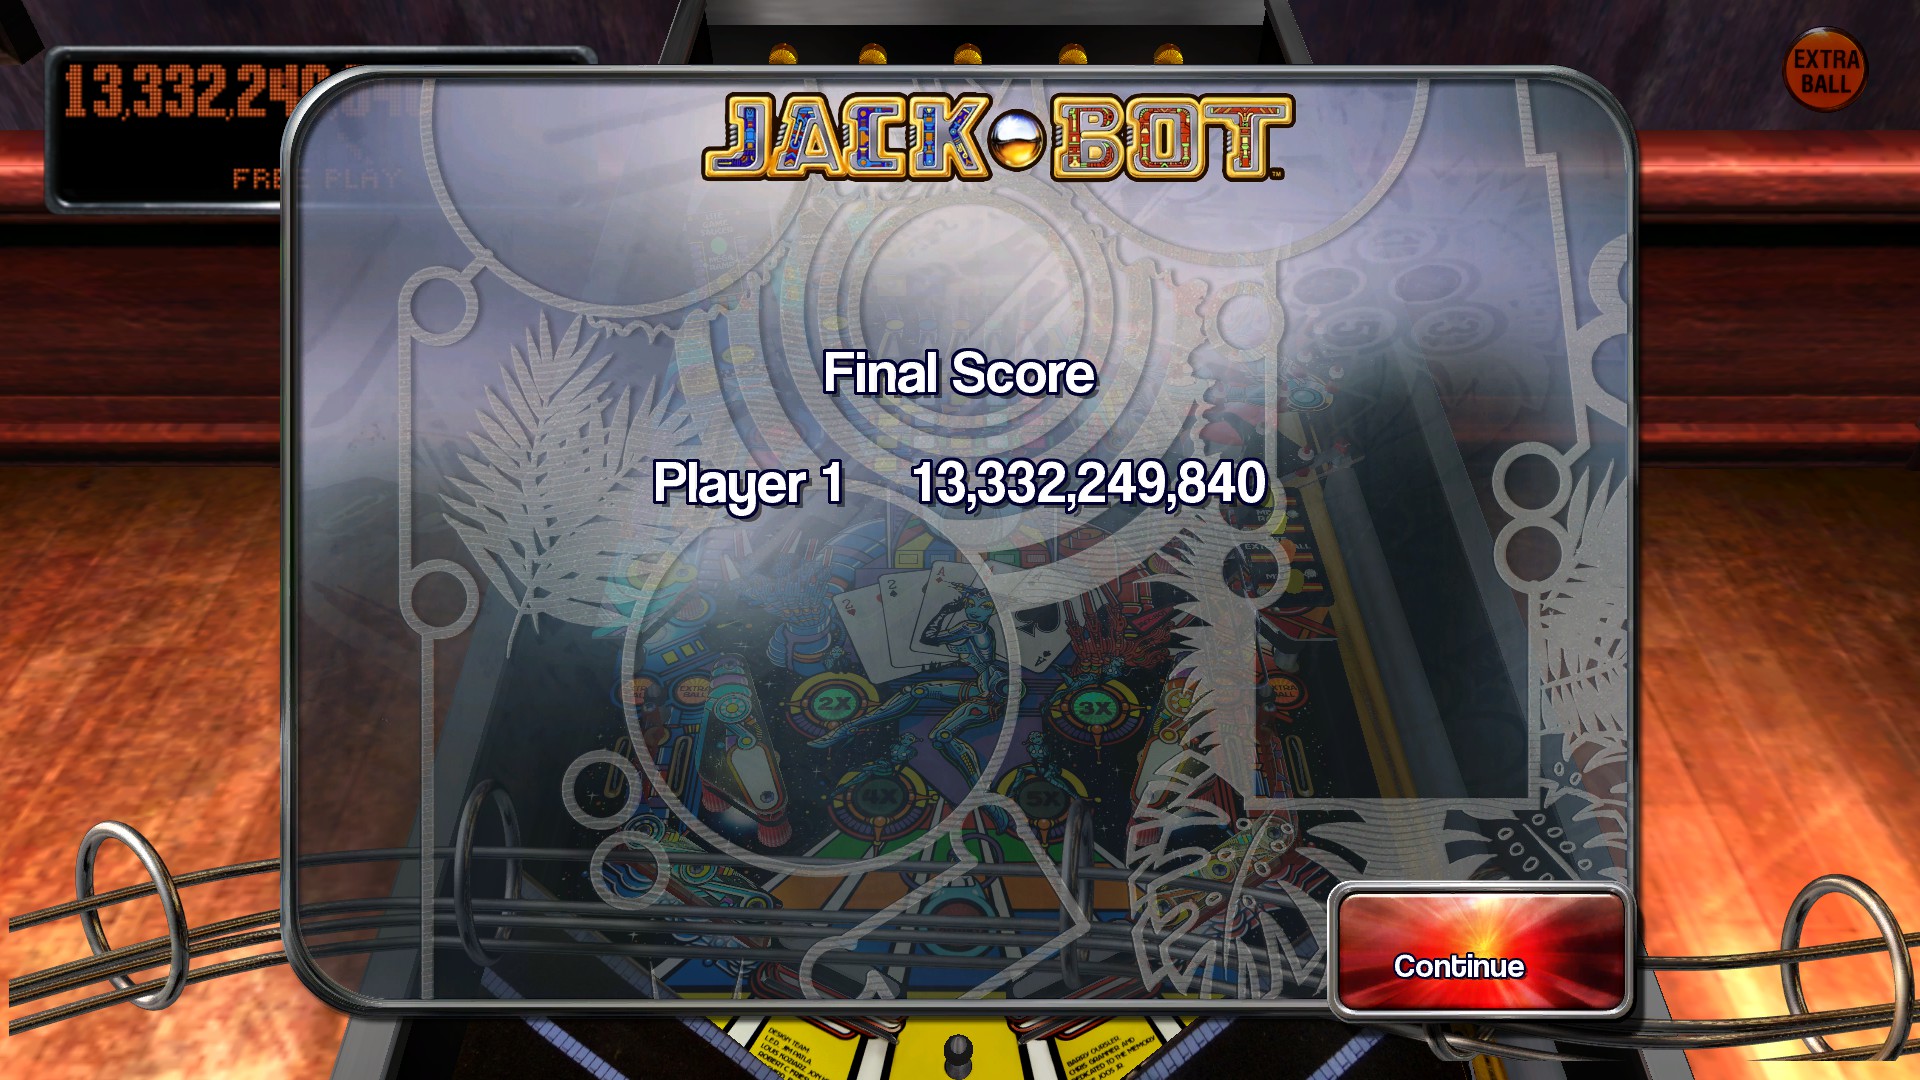 TheTrickster: Pinball Arcade: Jack*Bot (PC) 13,332,249,840 points on 2015-11-22 05:49:20